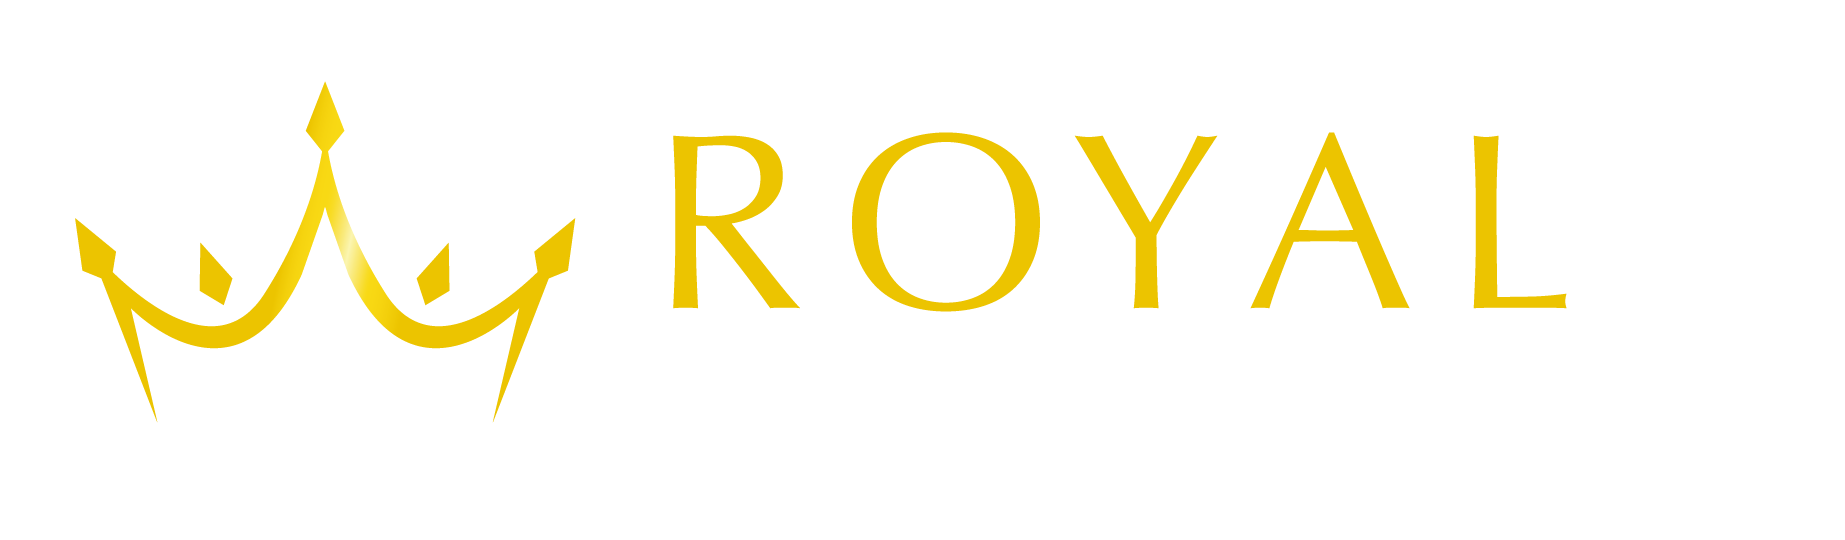 Royal Coaching Academy